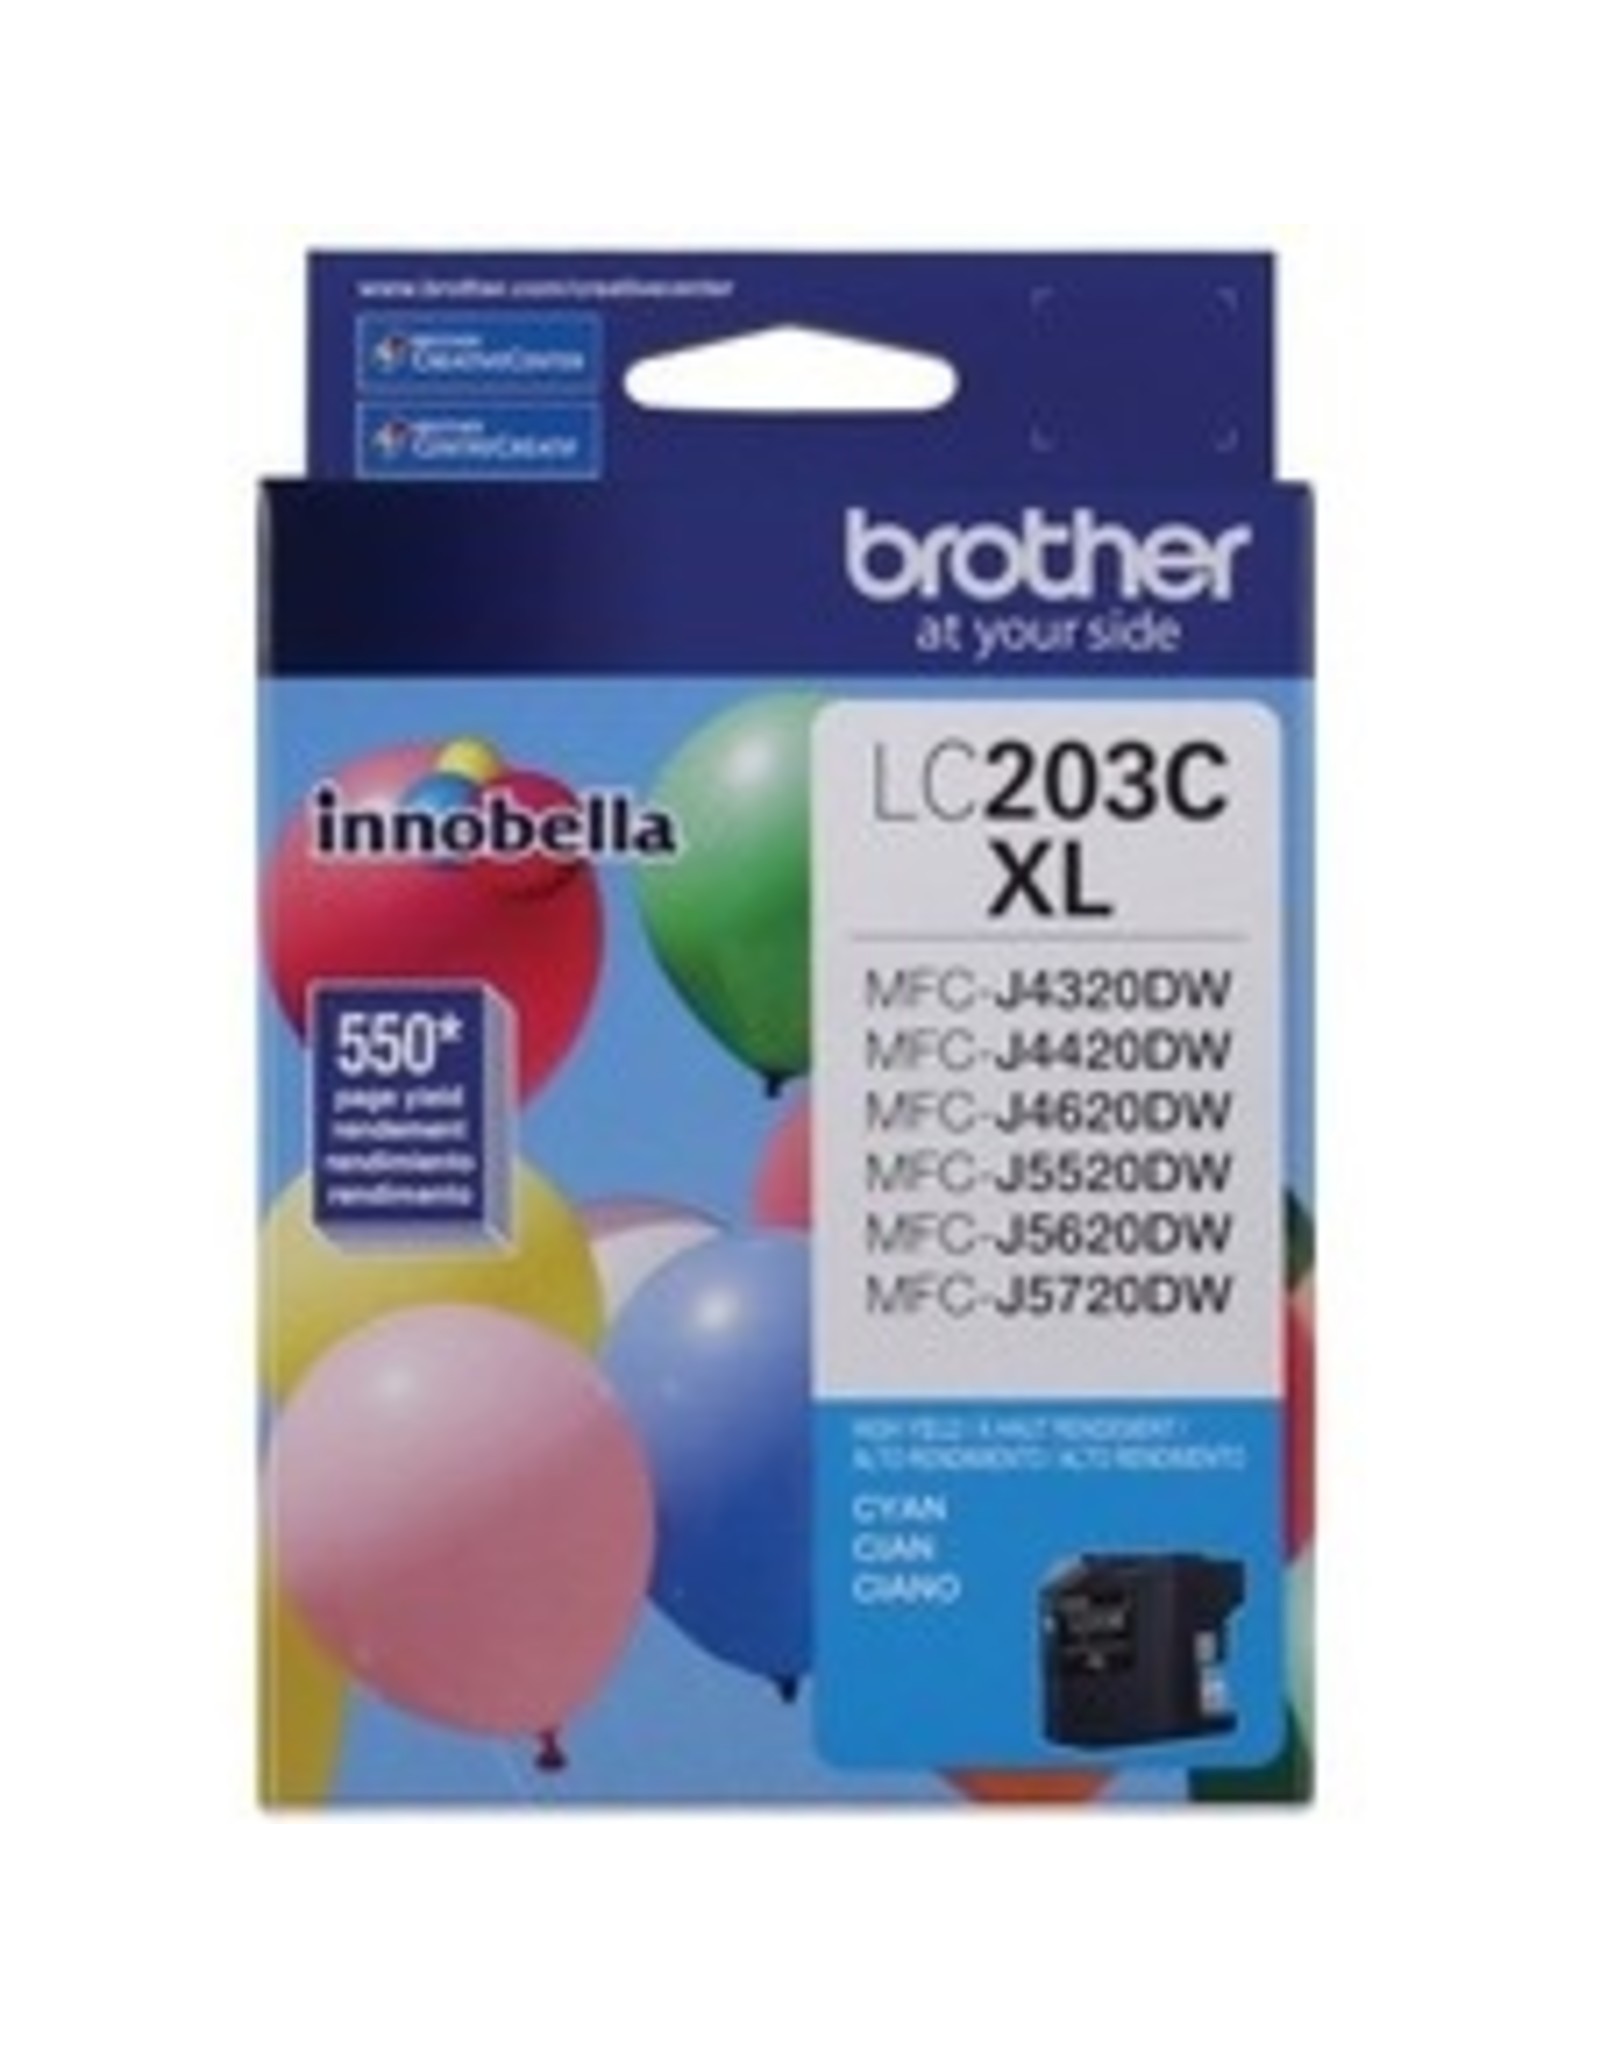 Brother Brother Innobella LC203CS Original Ink Cartridge - Cyan